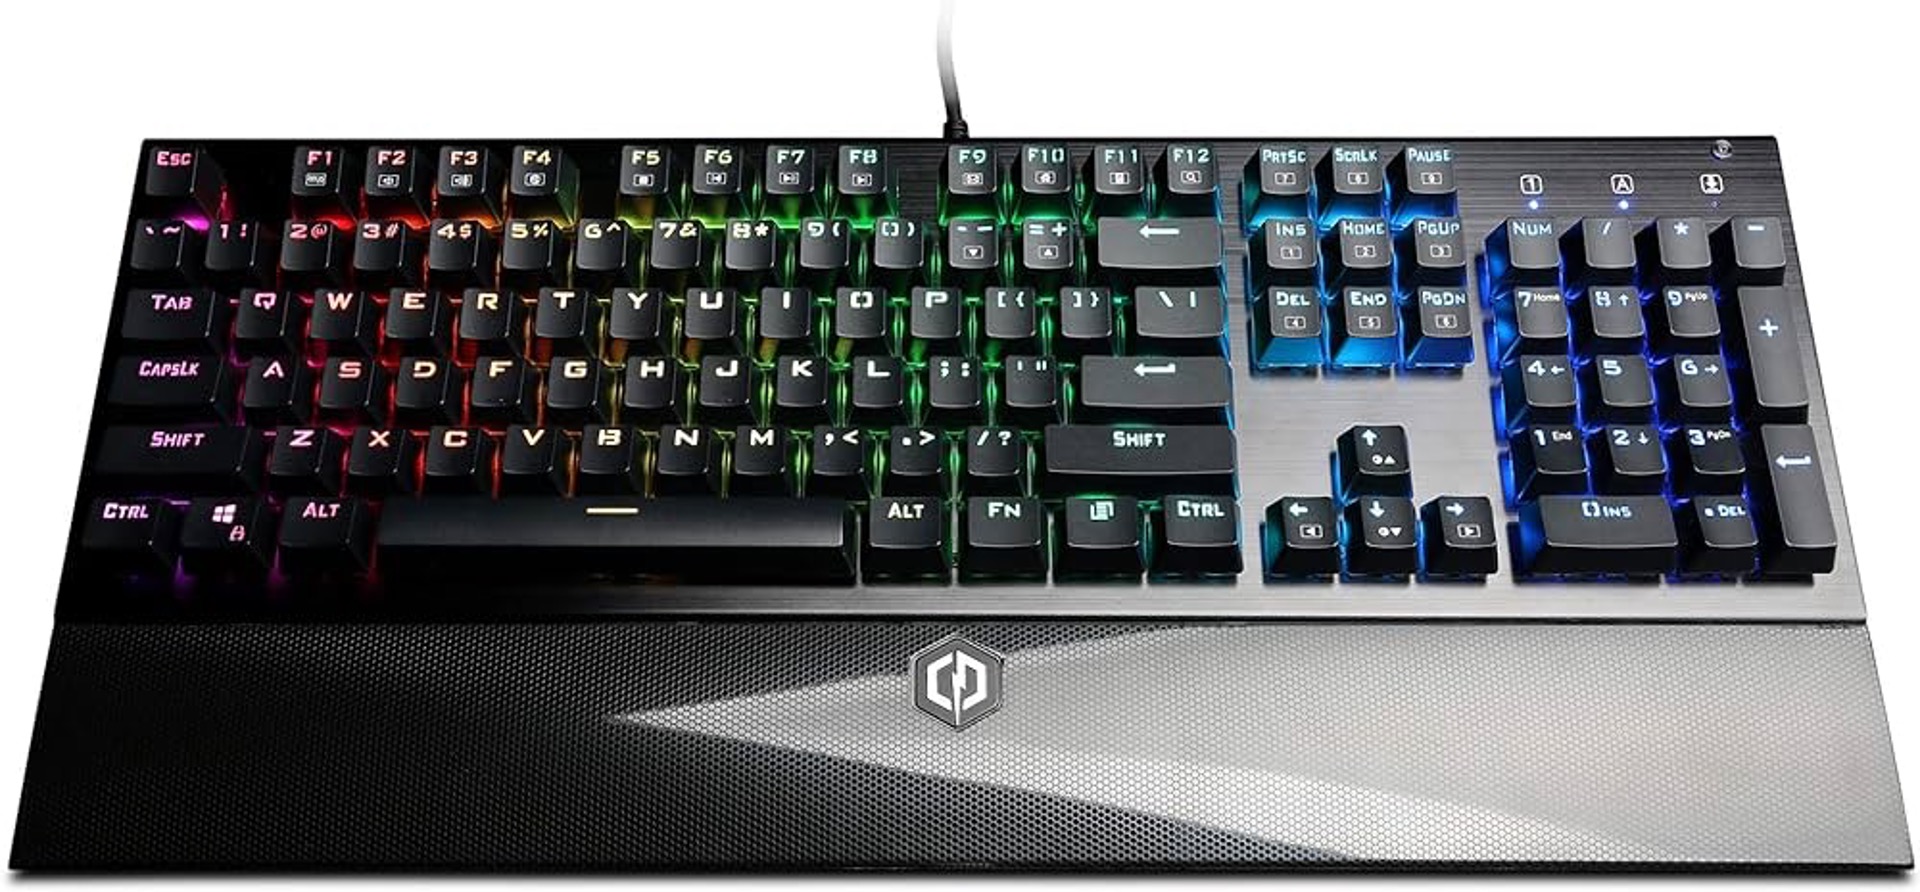 Skorpion K2 RGB Mechanical Gaming Keyboard: How To Change Color